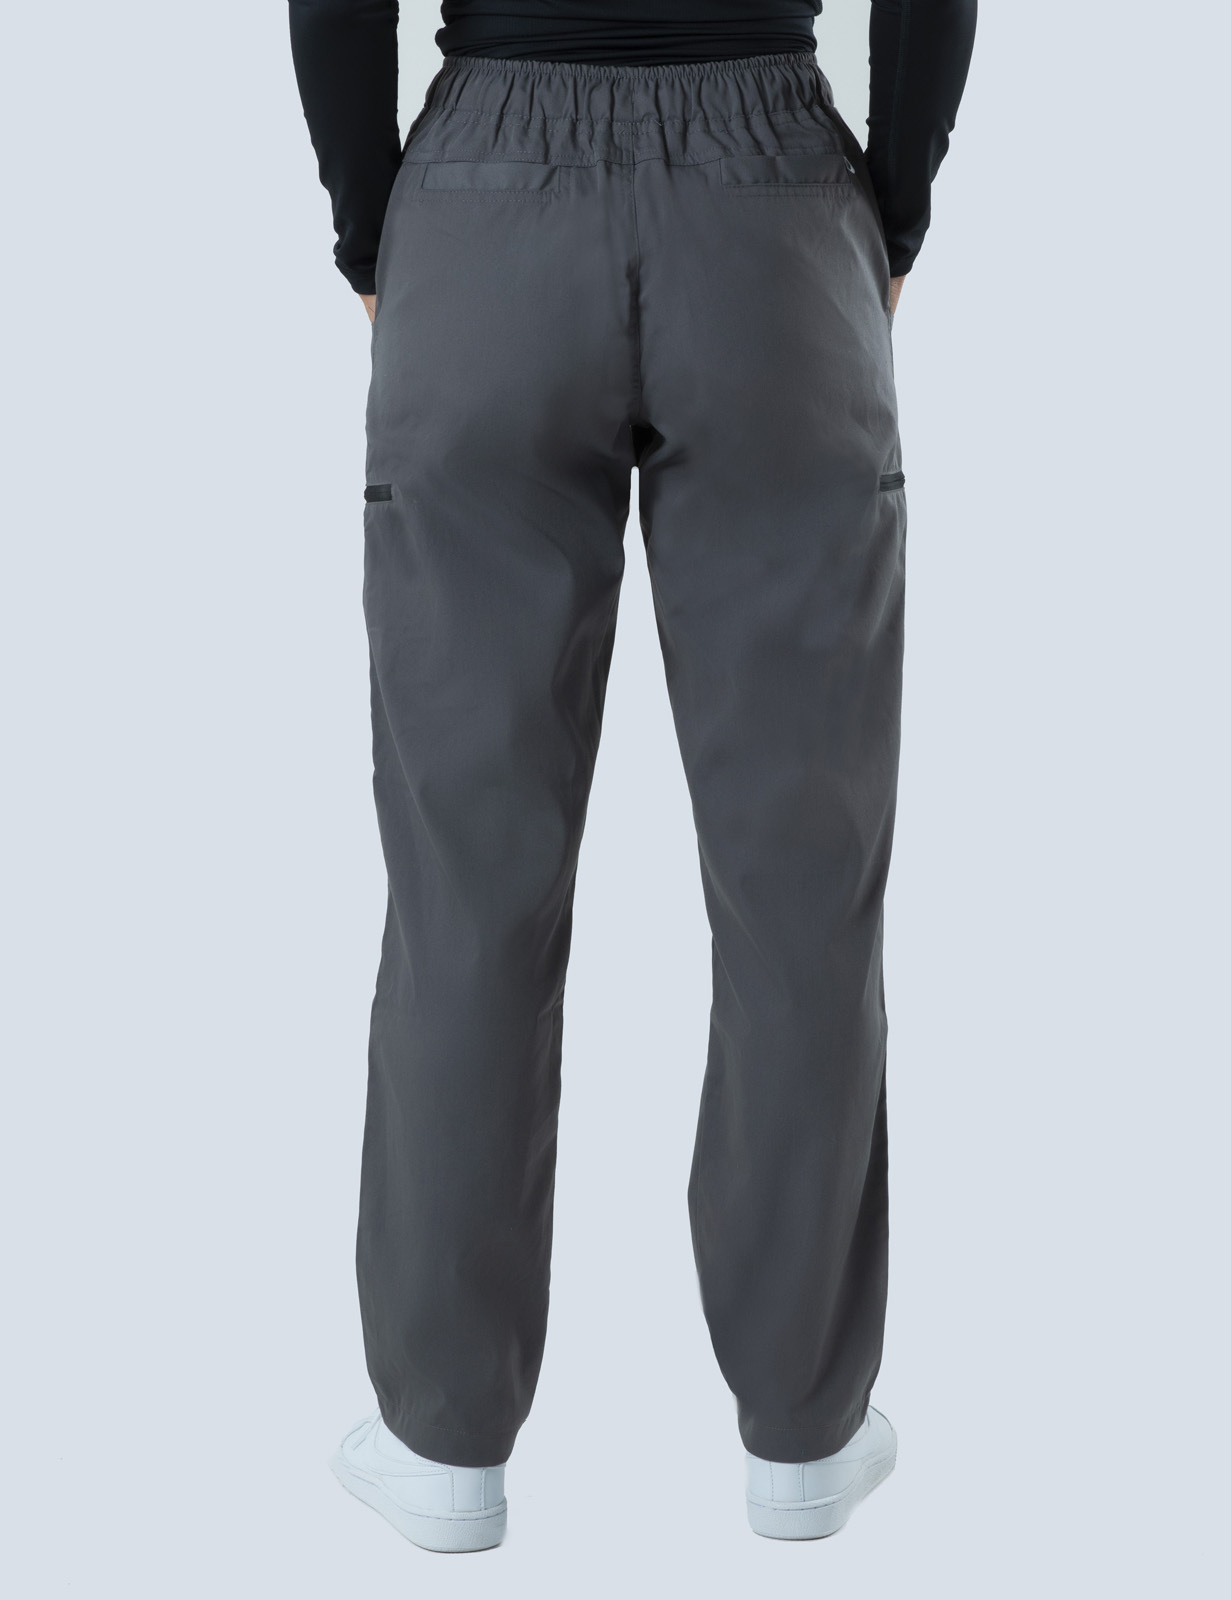 Women's Utility Pants - Steel Grey - X Small